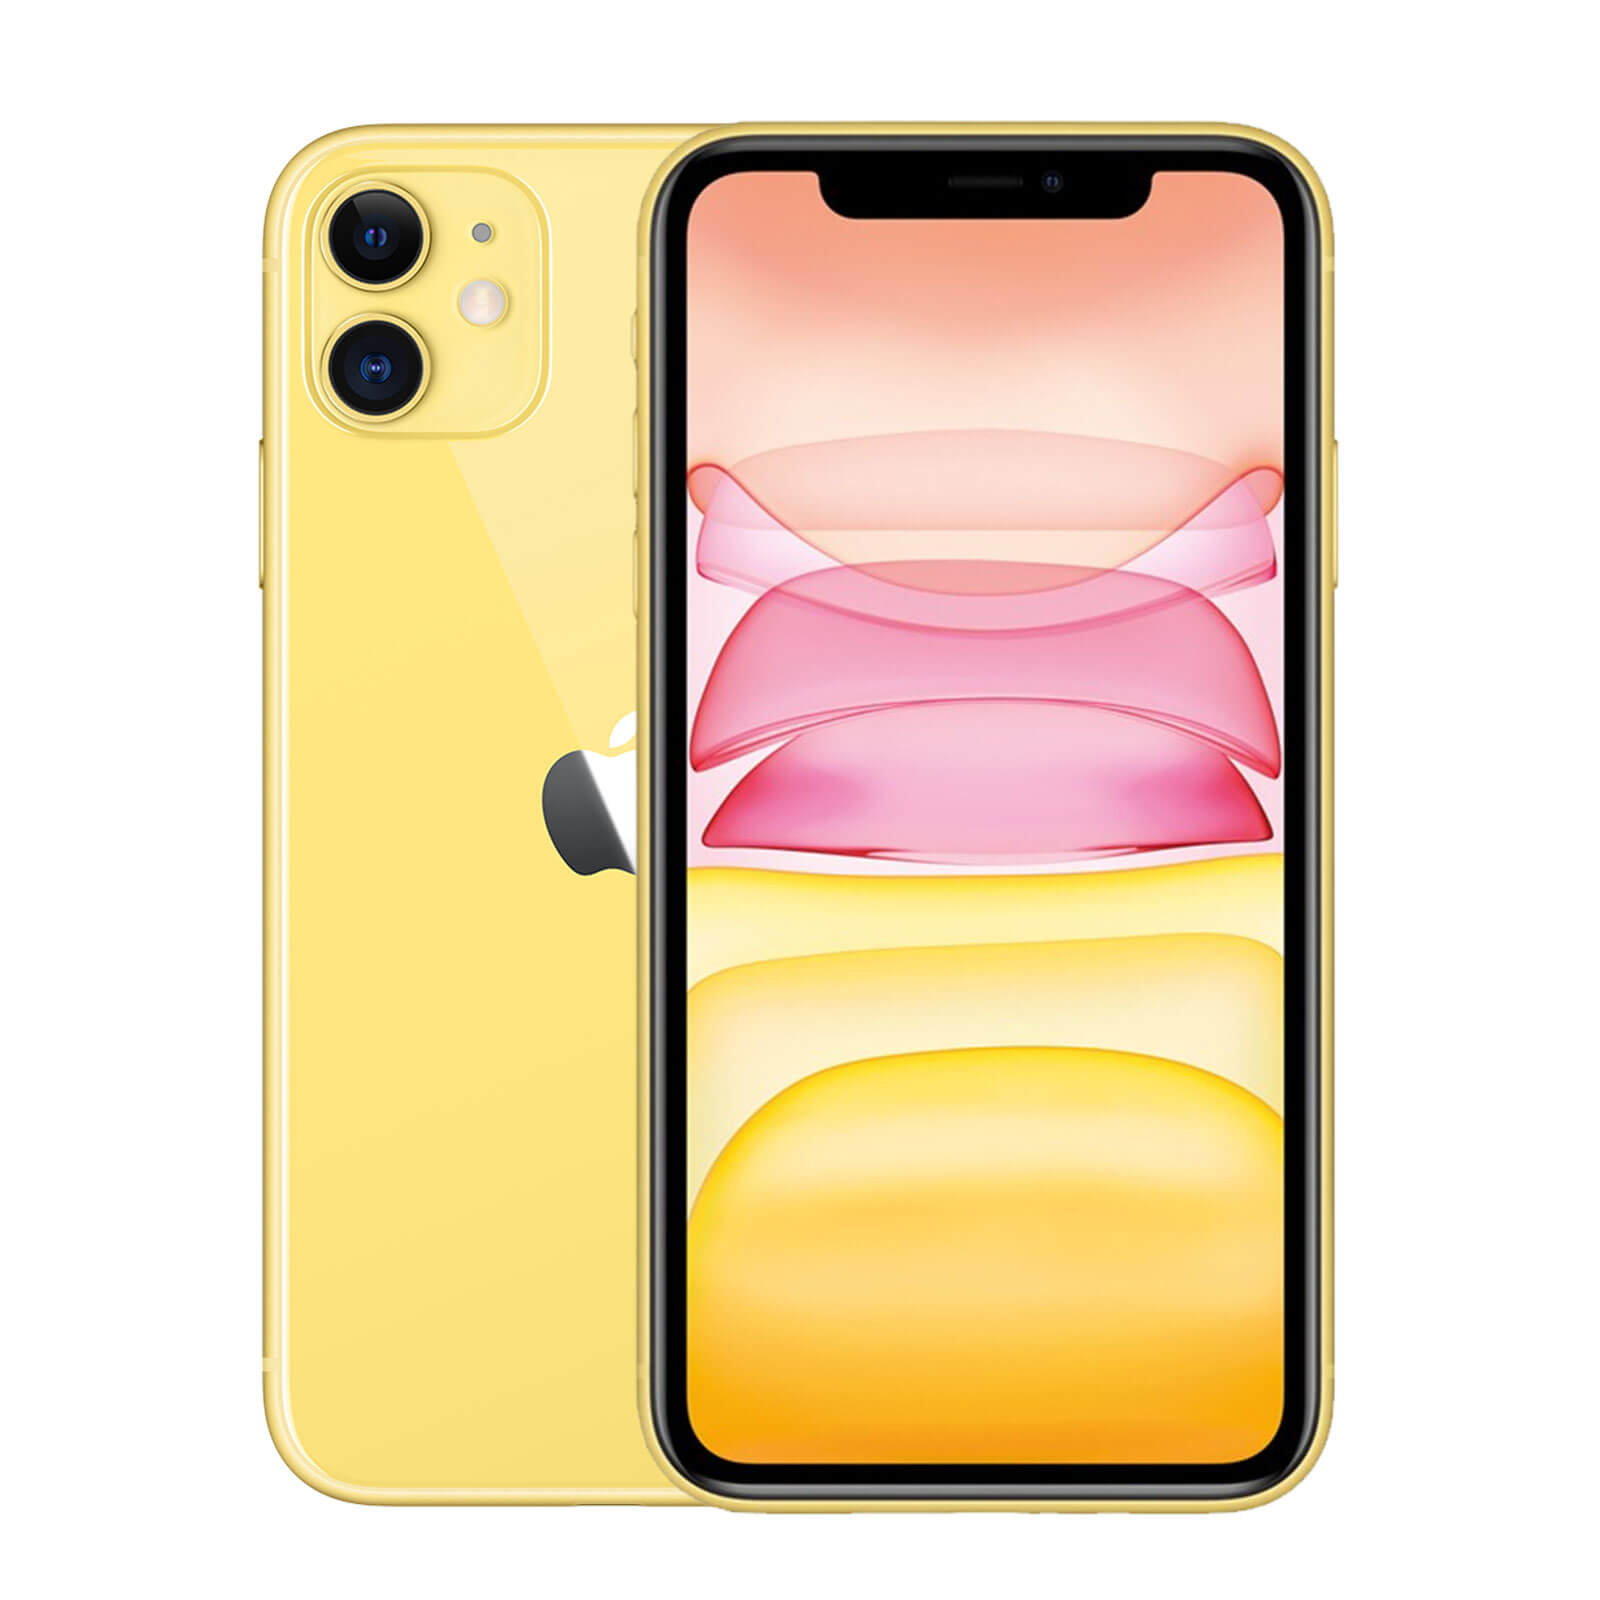 Apple iPhone 11 128GB Yellow Good - Sprint